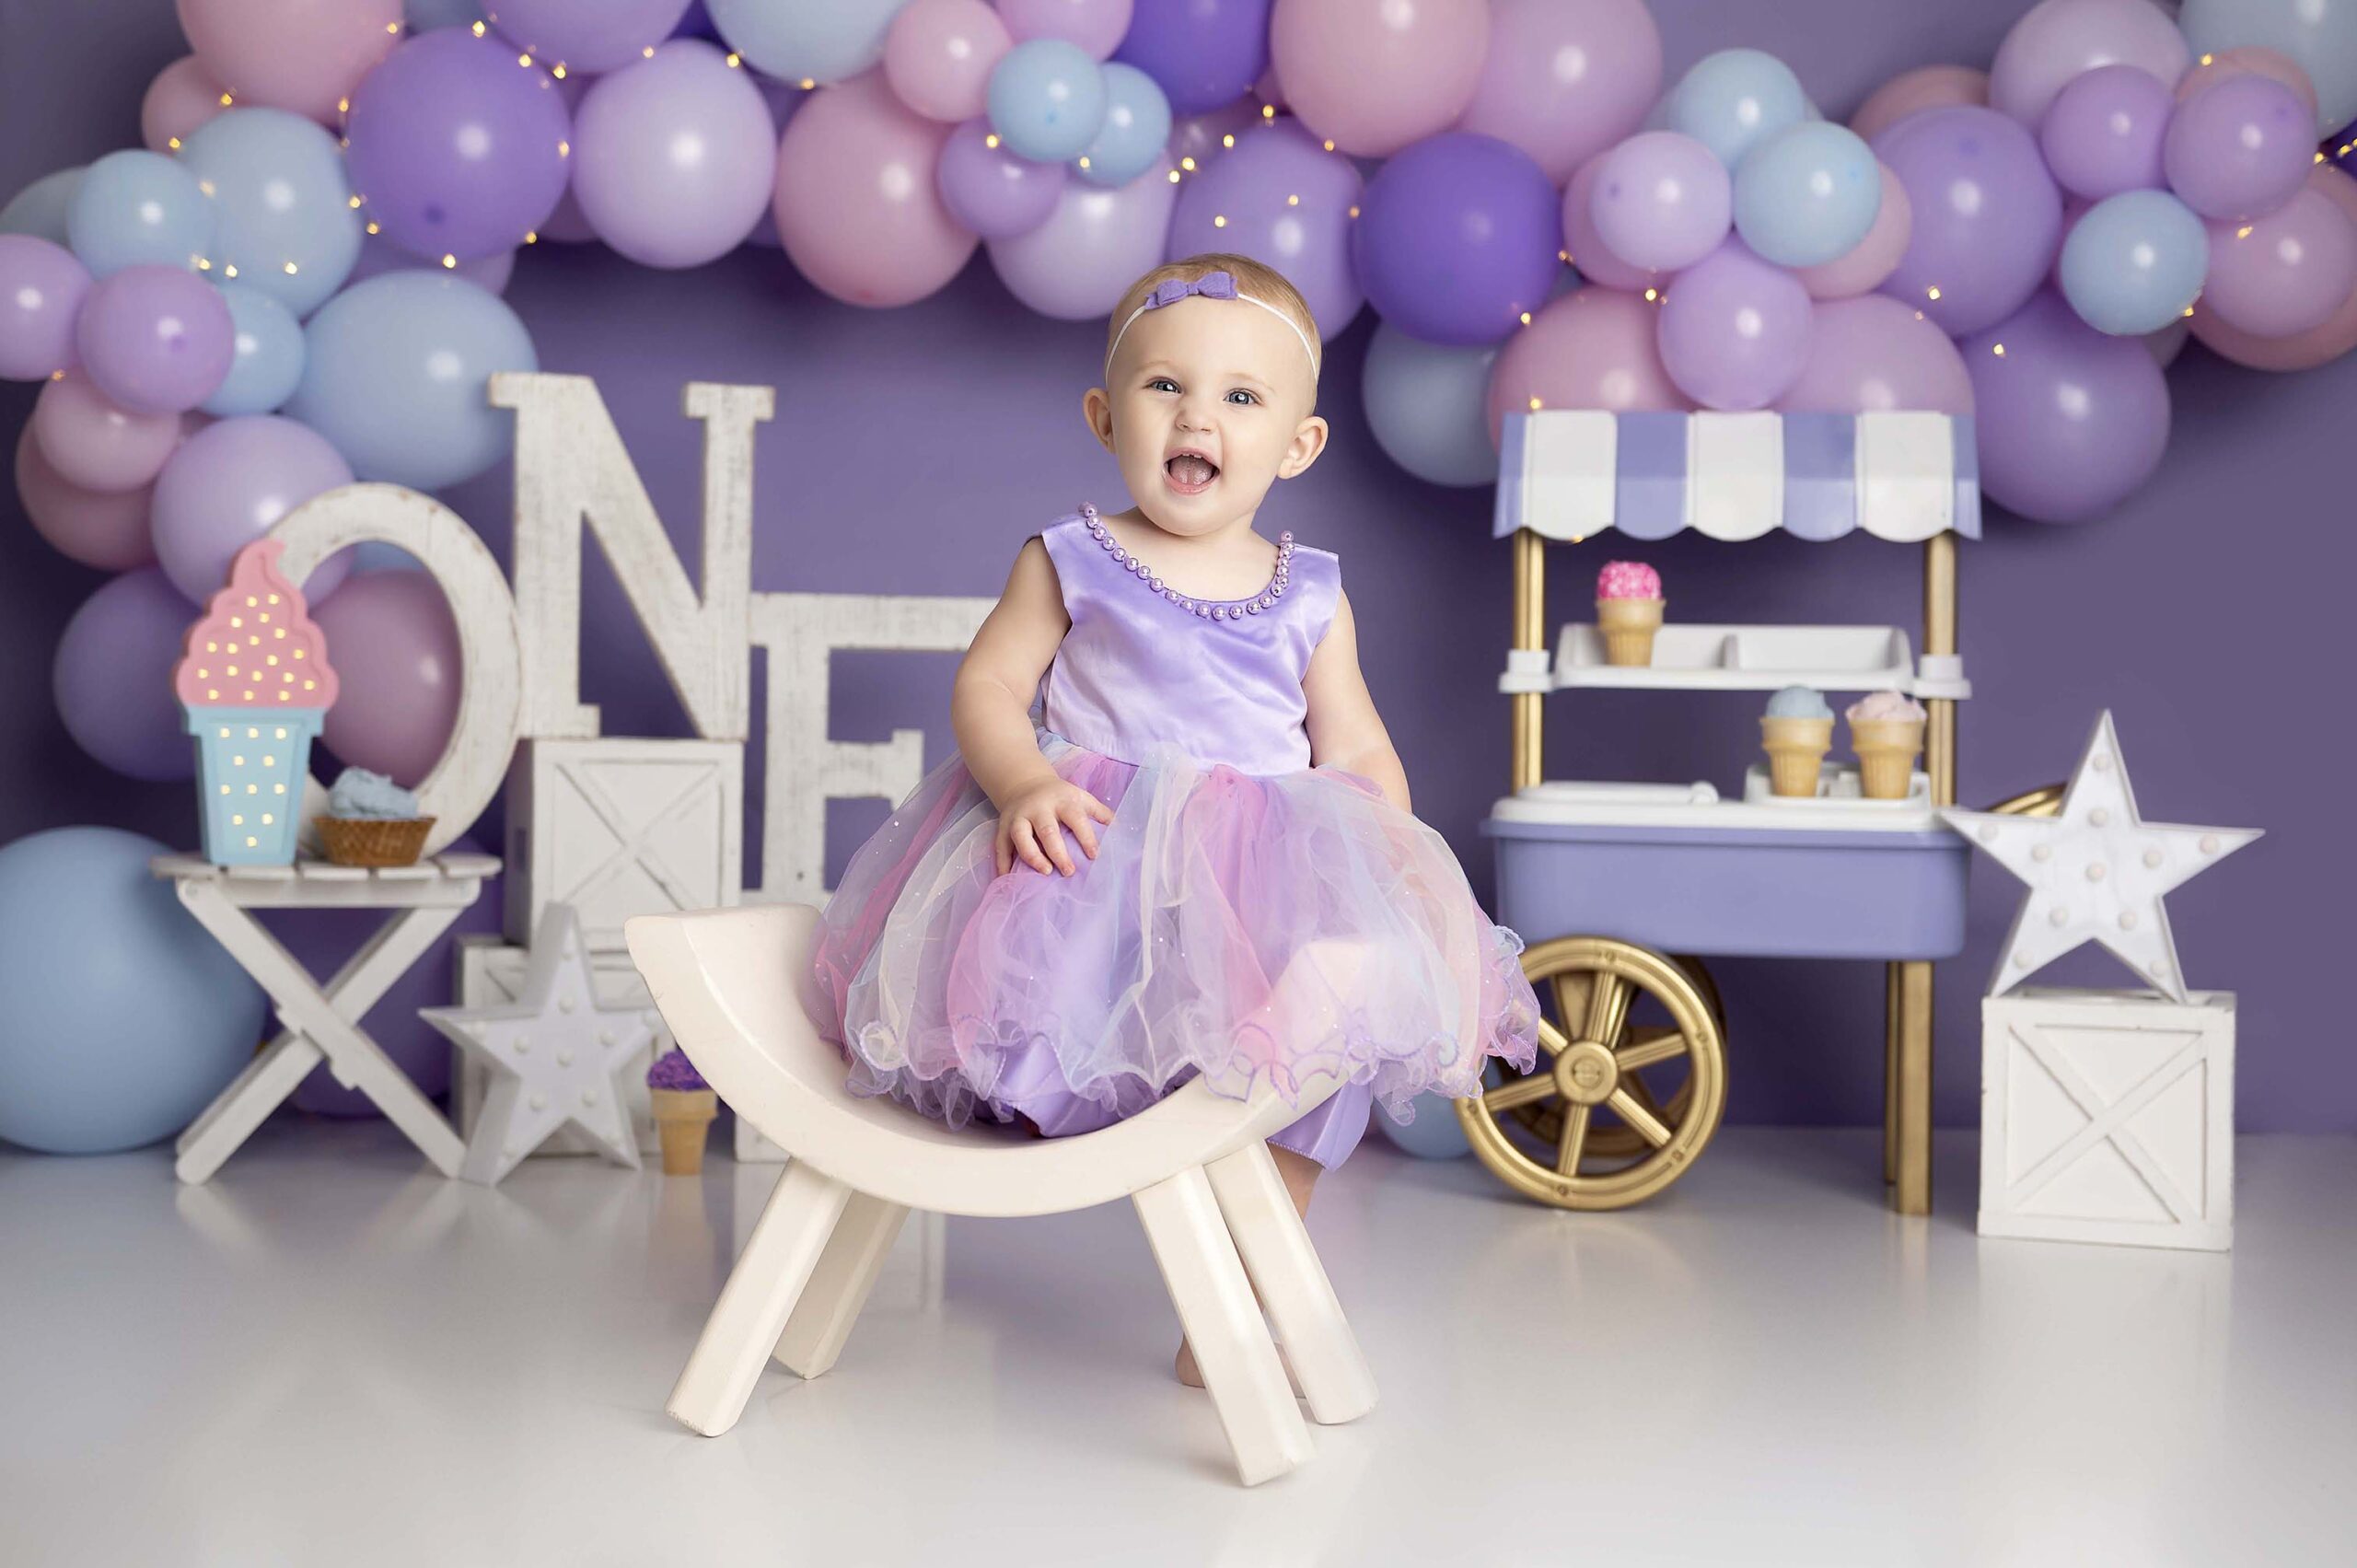 Lewisville-Flower-Mound-Denton-cake-smash-photography-first-birthday-one-year-old-girlice-cream-cart-purple-pink